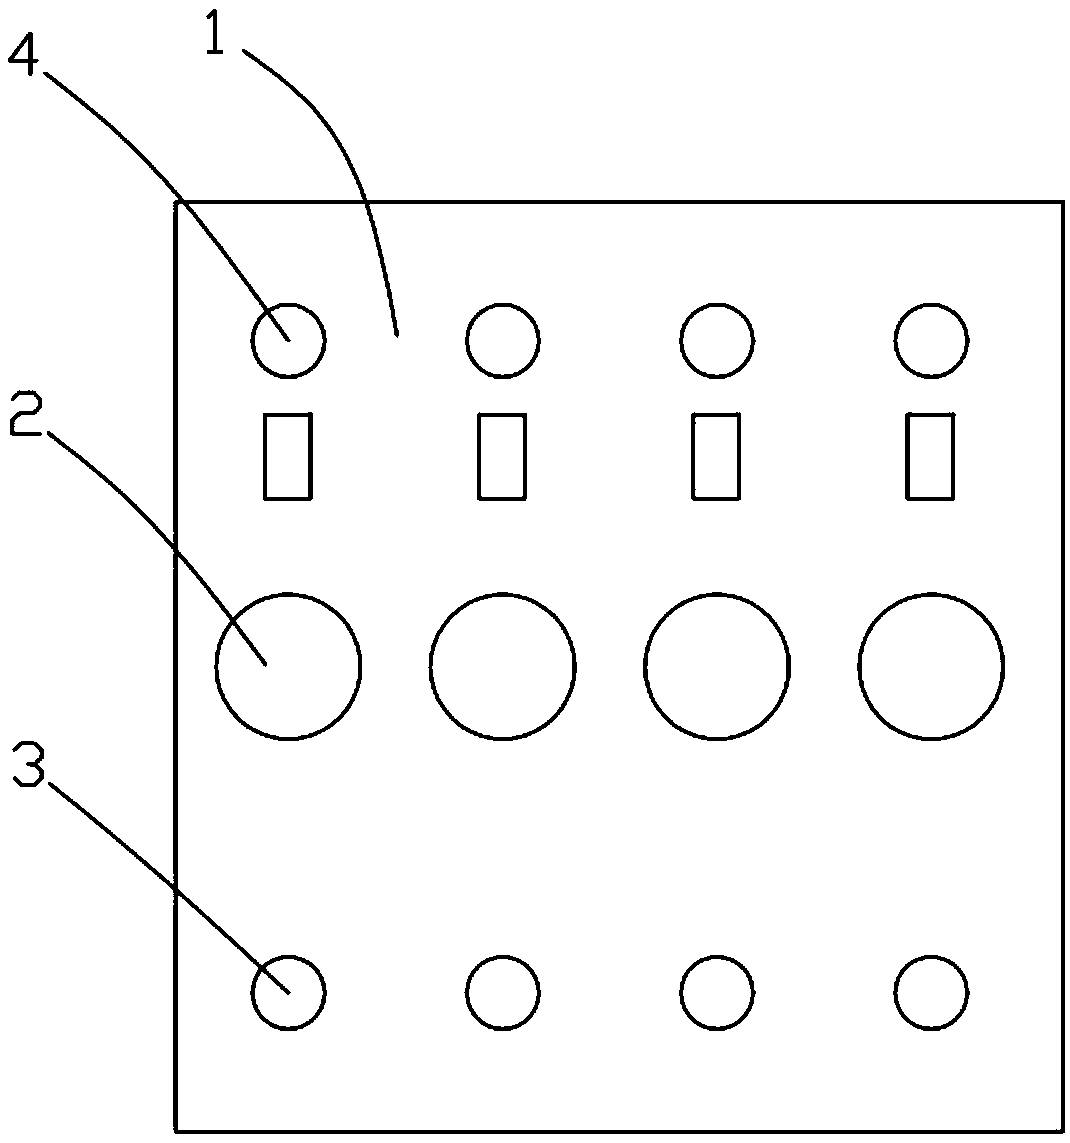 Process method of TV speaker assembly production line